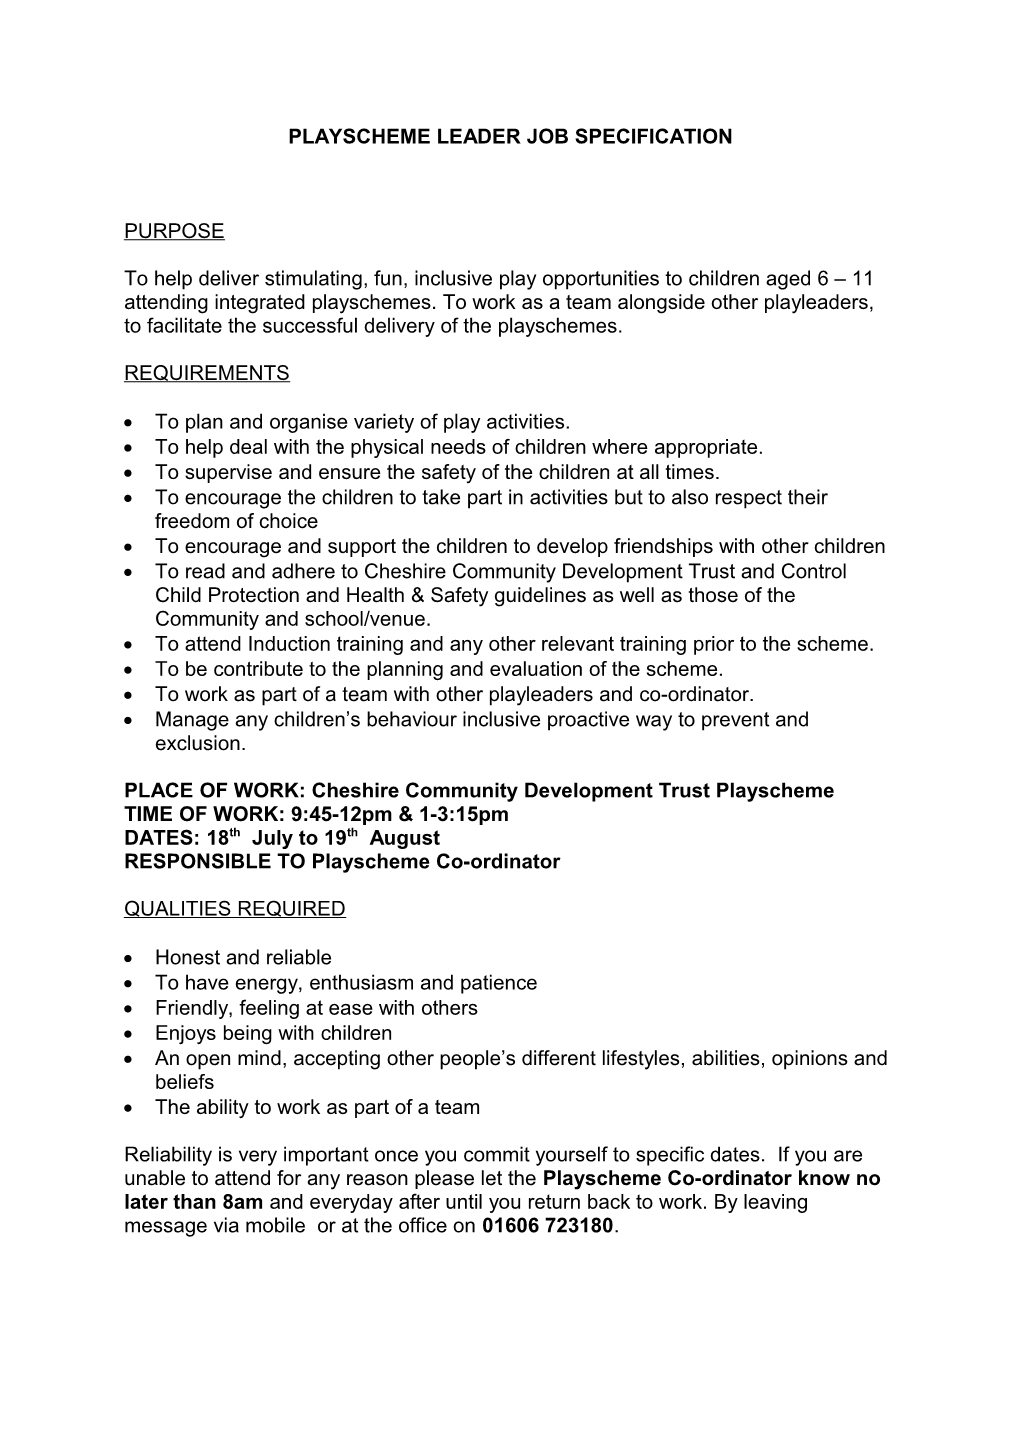 Playscheme Leader Job Specification